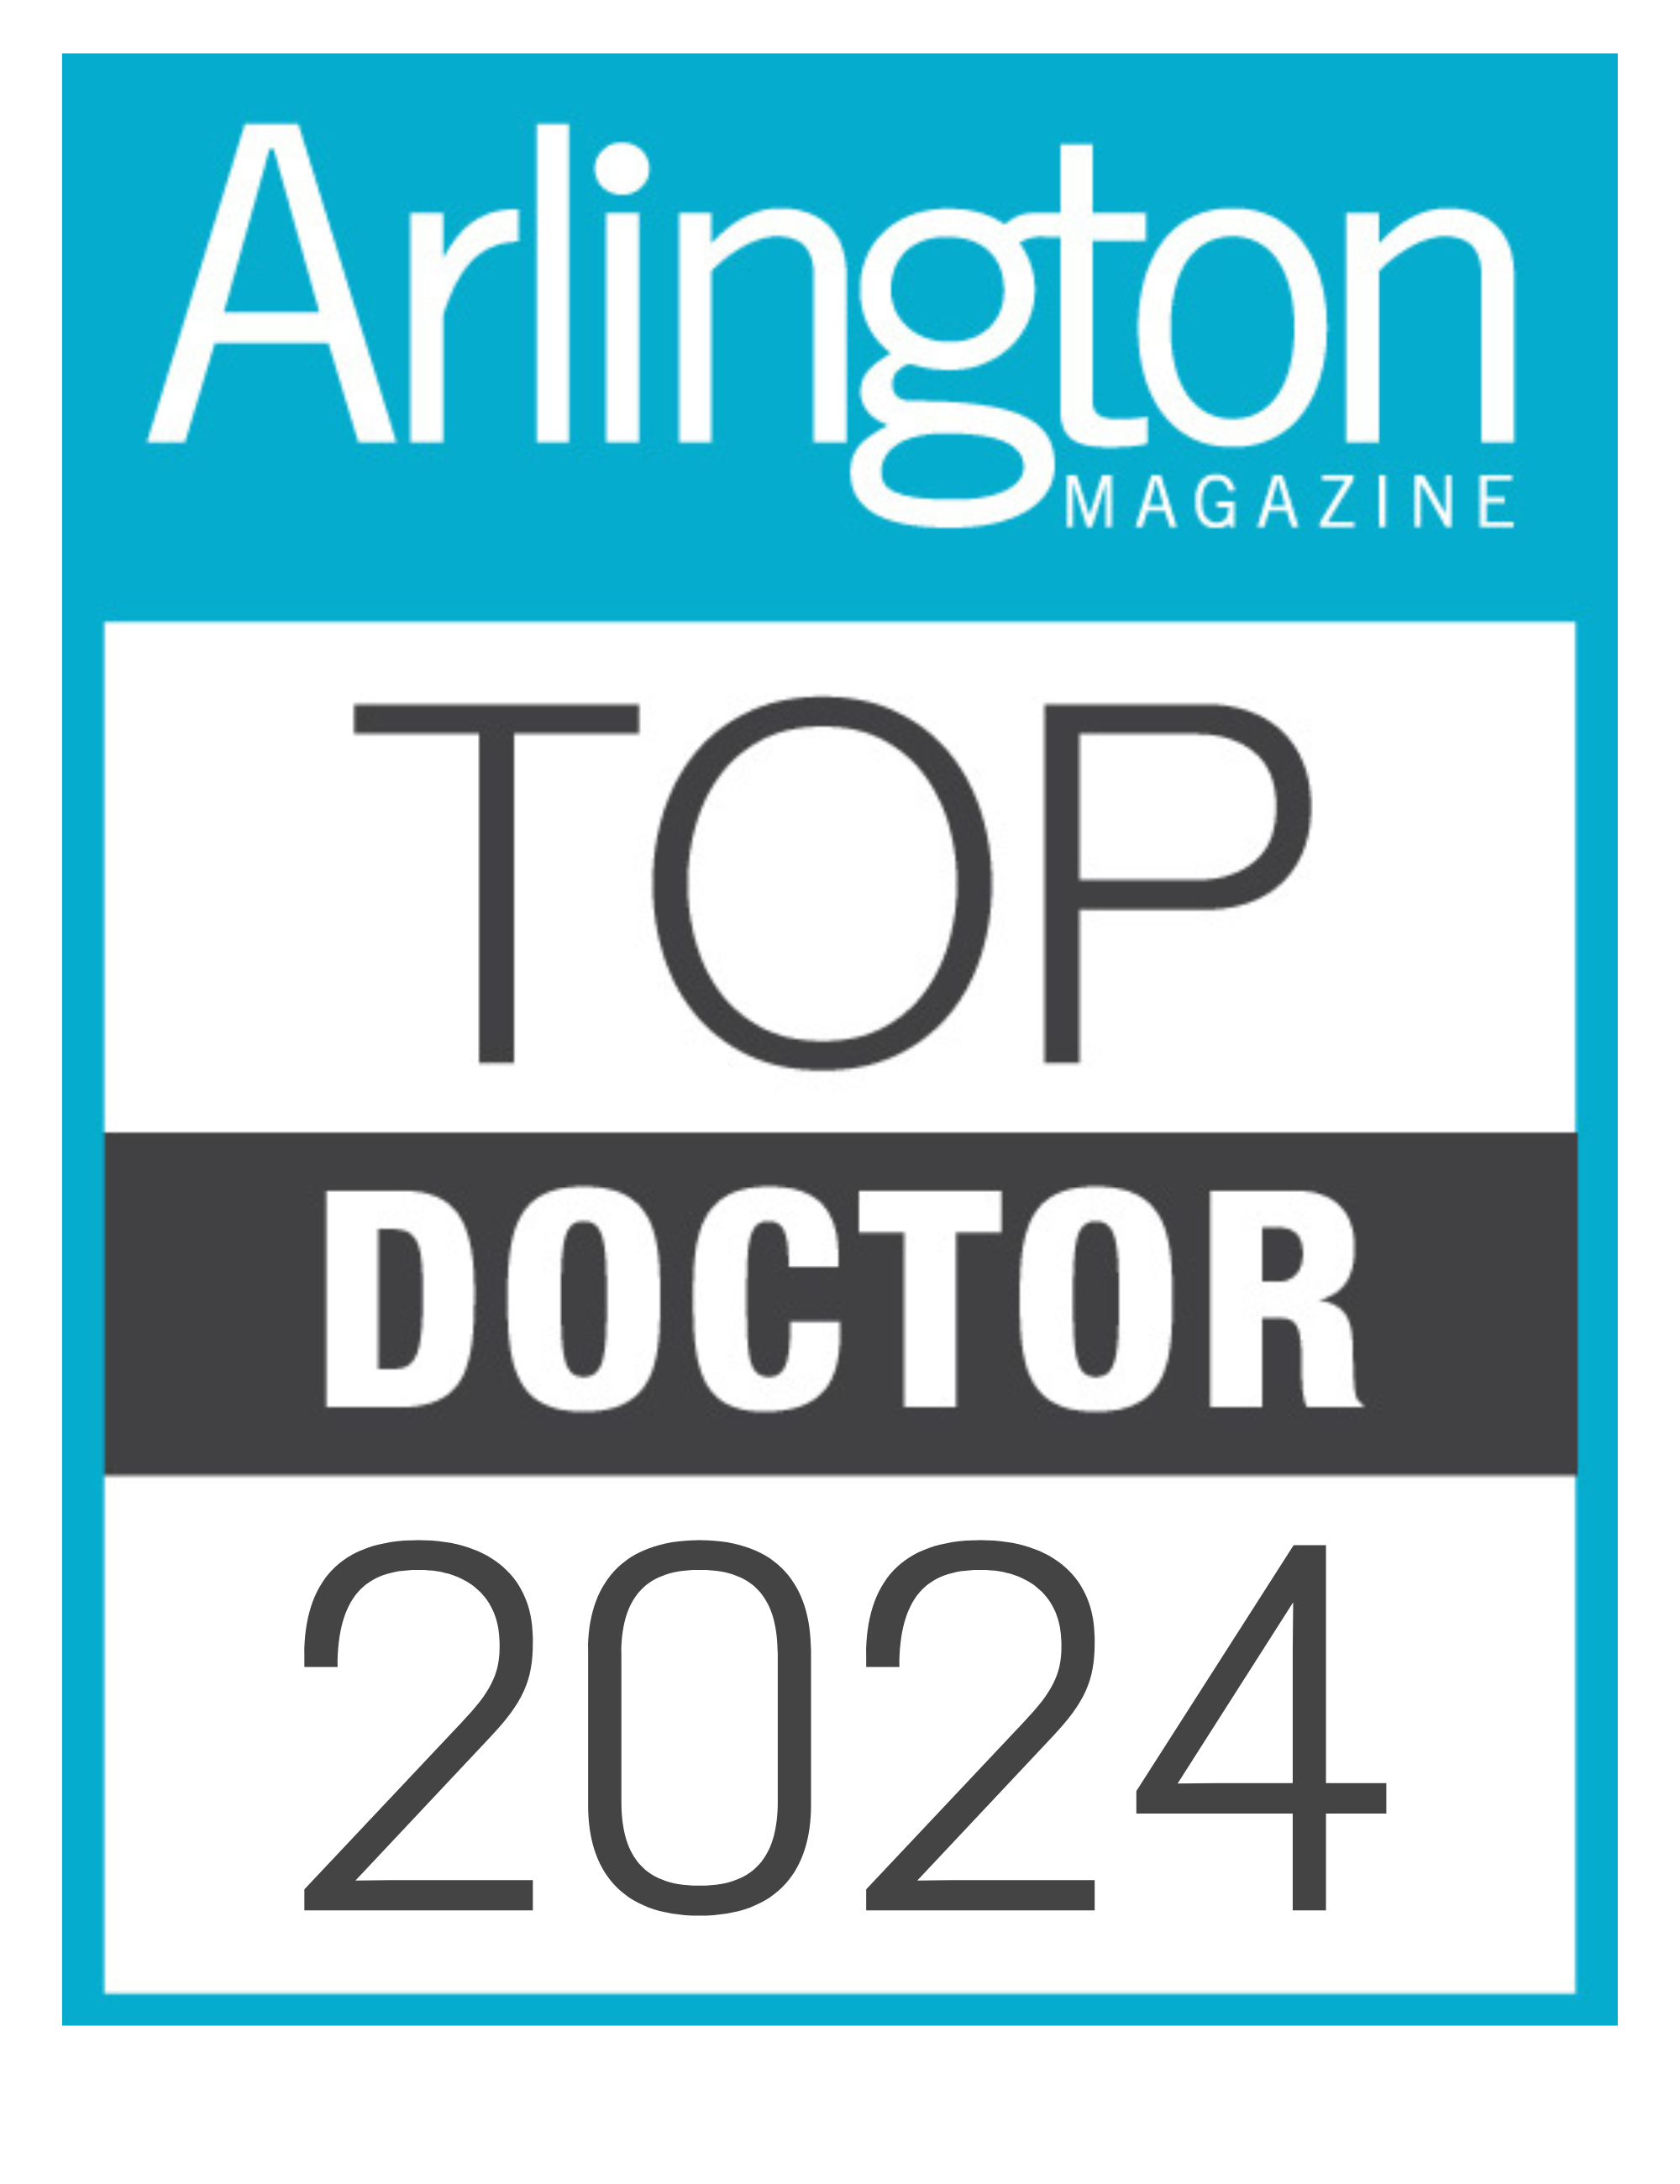 Arlington Magazine top doctor 2024 badge